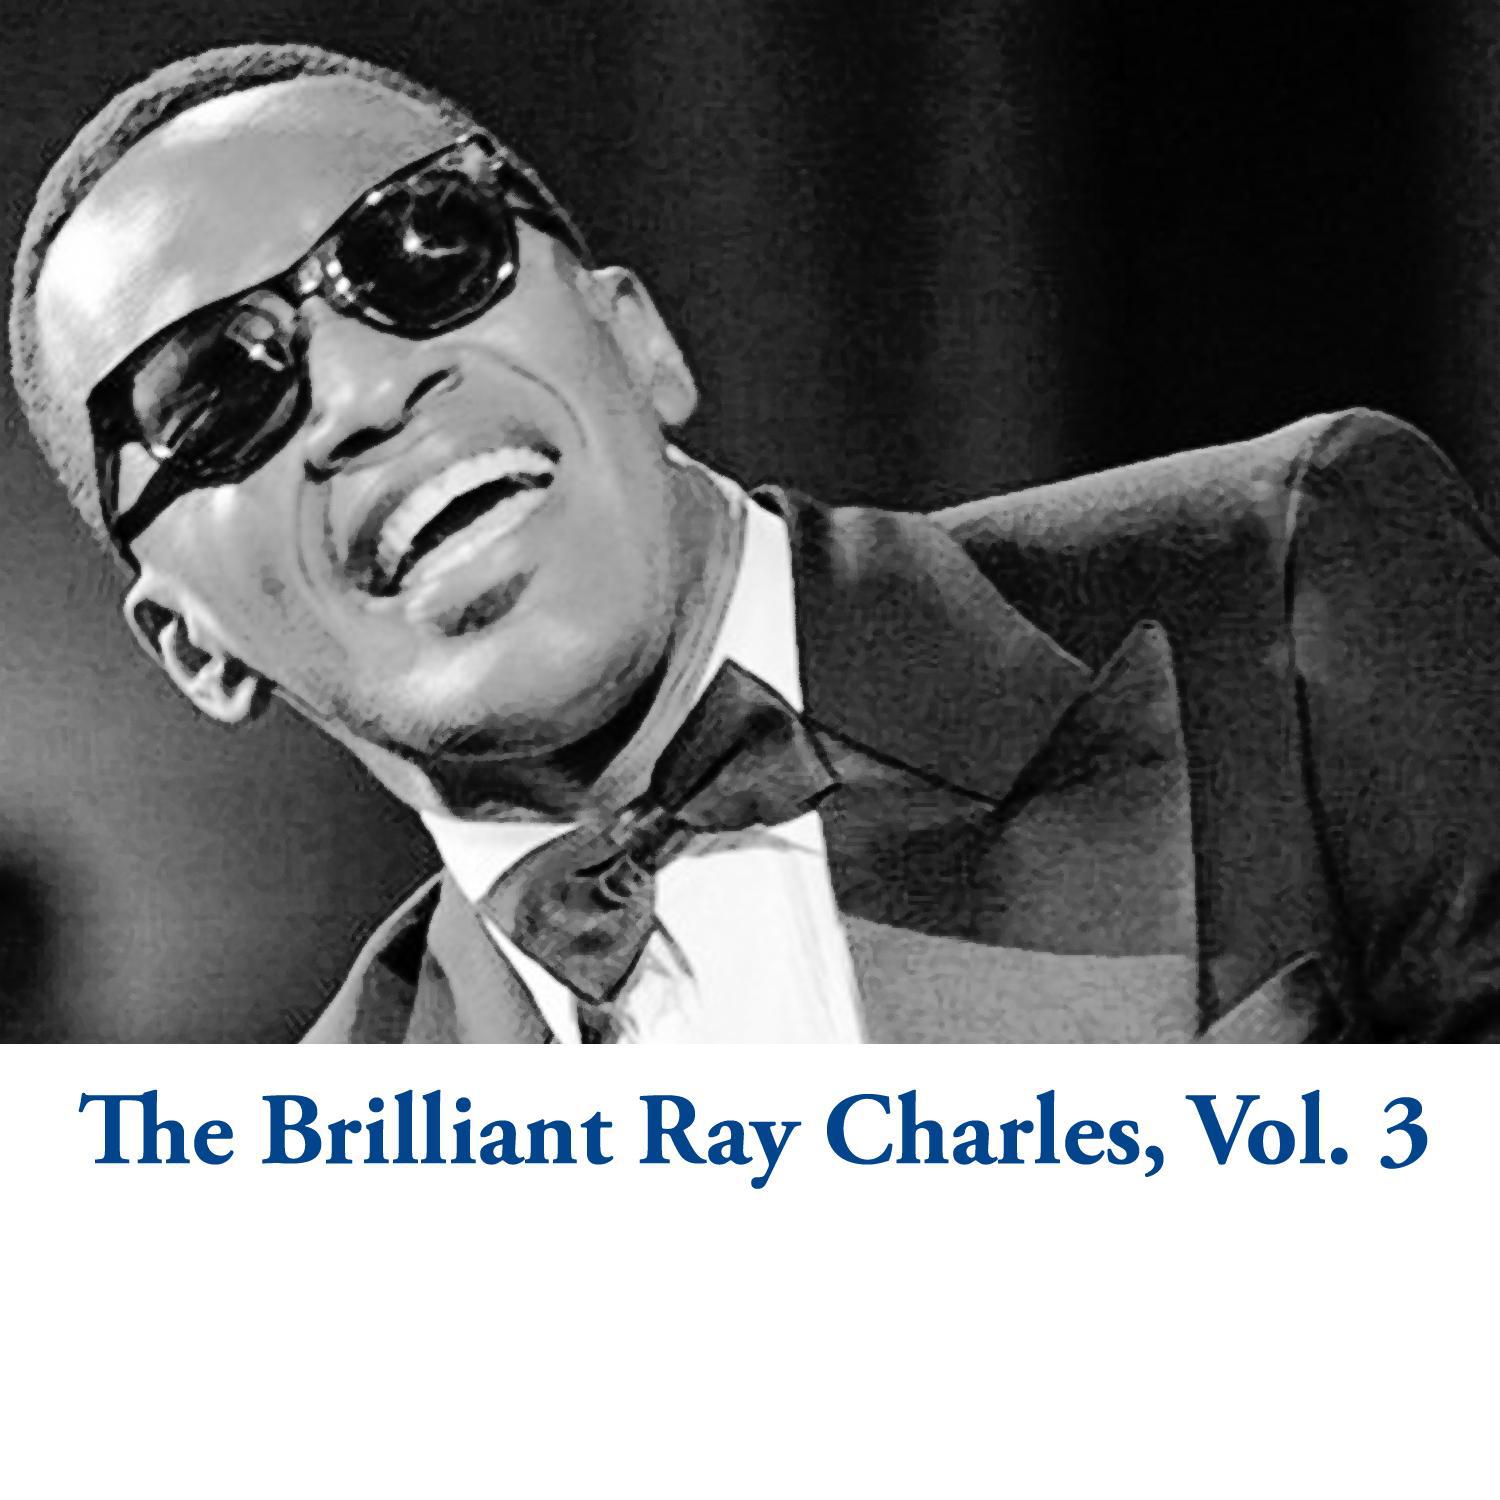 The Brilliant Ray Charles, Vol. 3